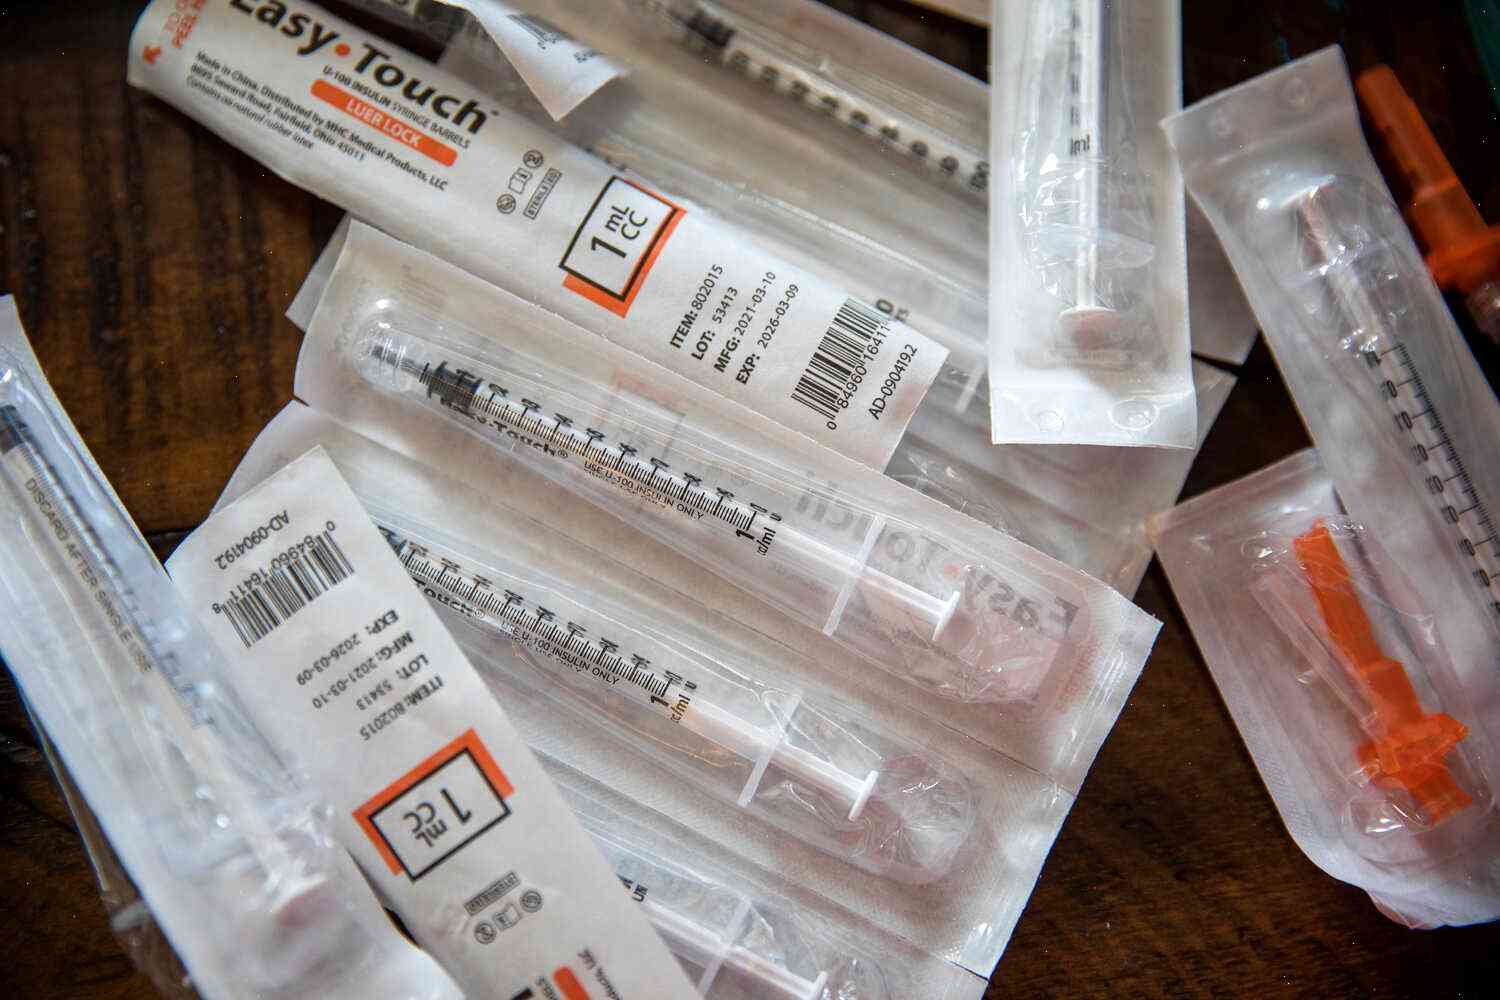 Senate repeals vaccine testing requirement